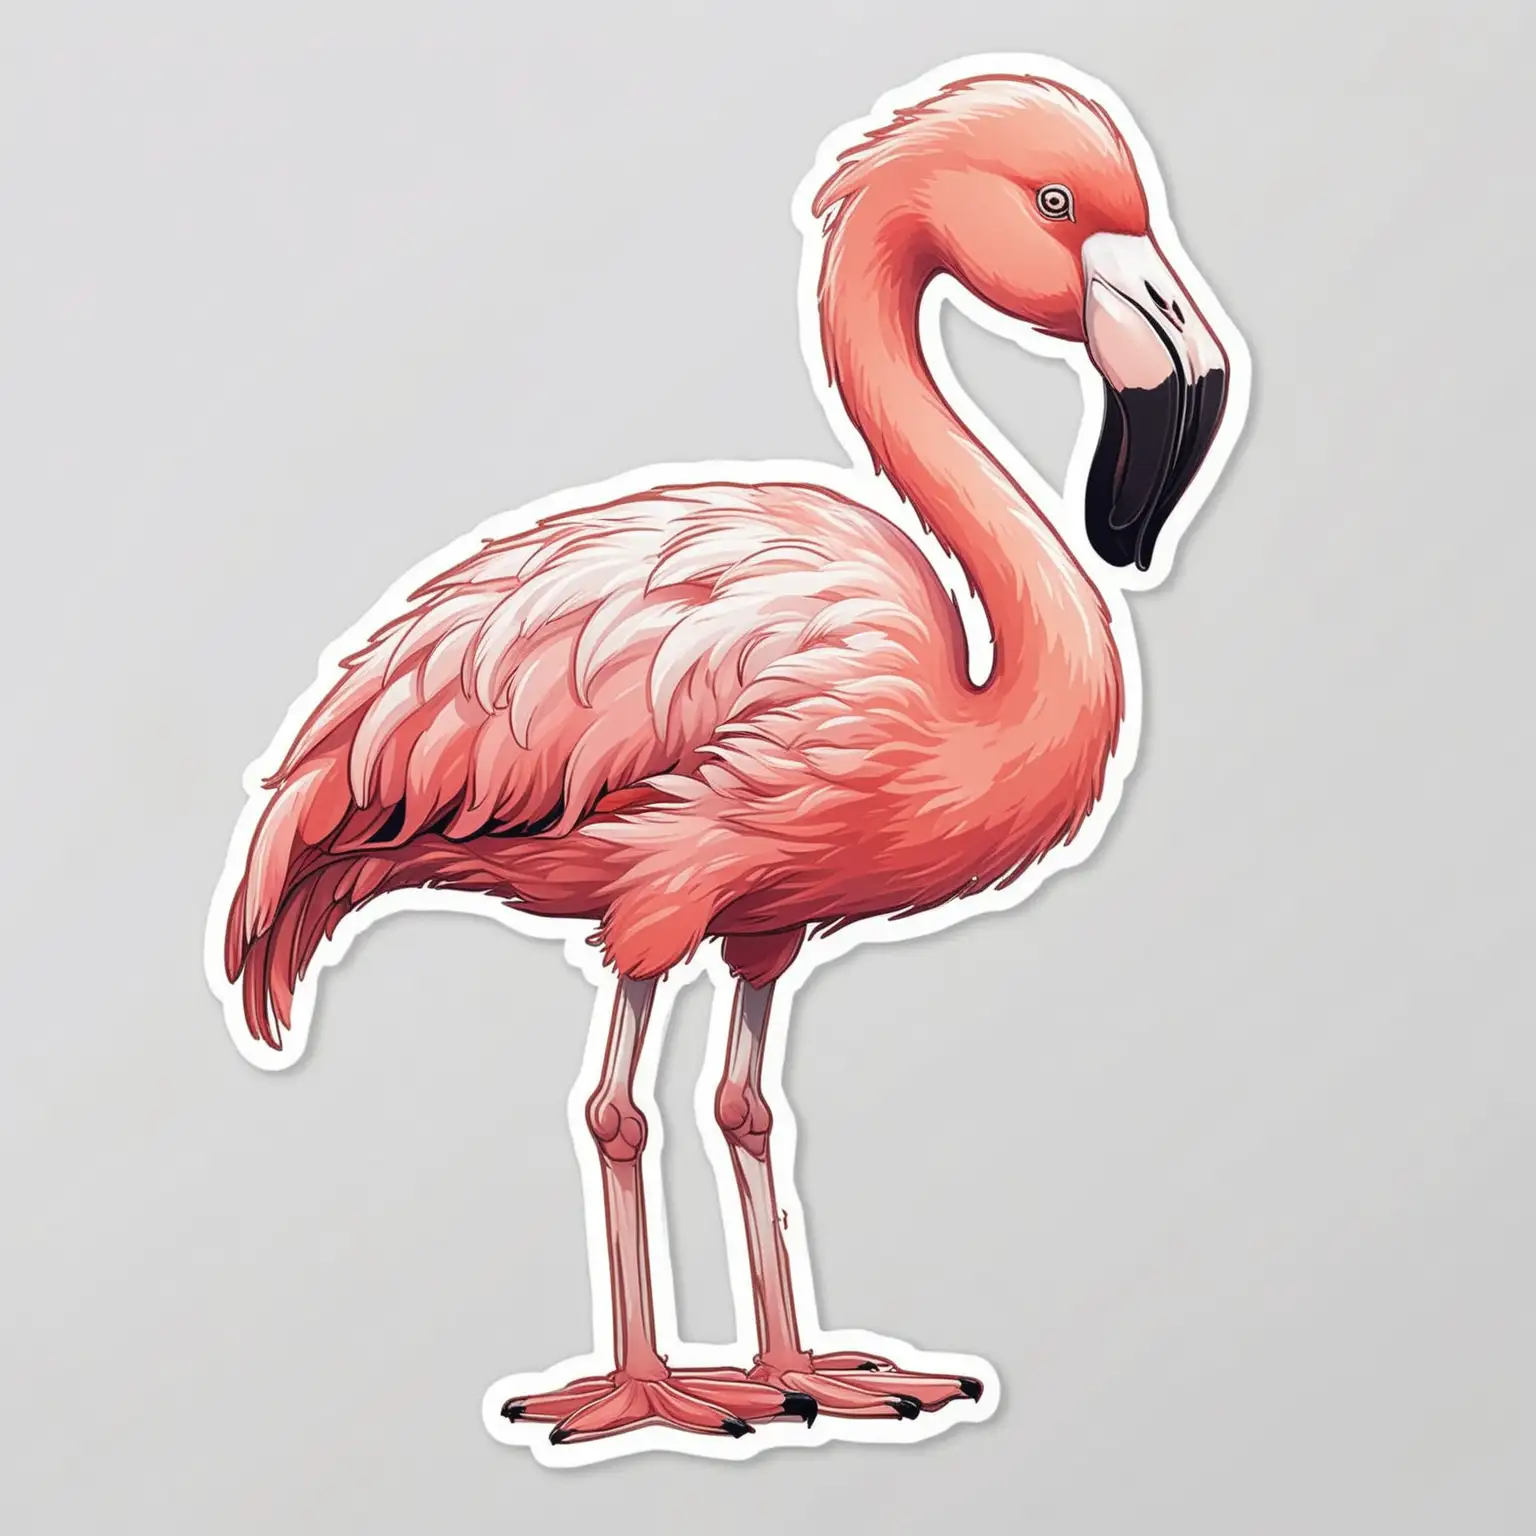 Cute Caricature Flamingo Full Body DieCut Vector Sticker on White Background